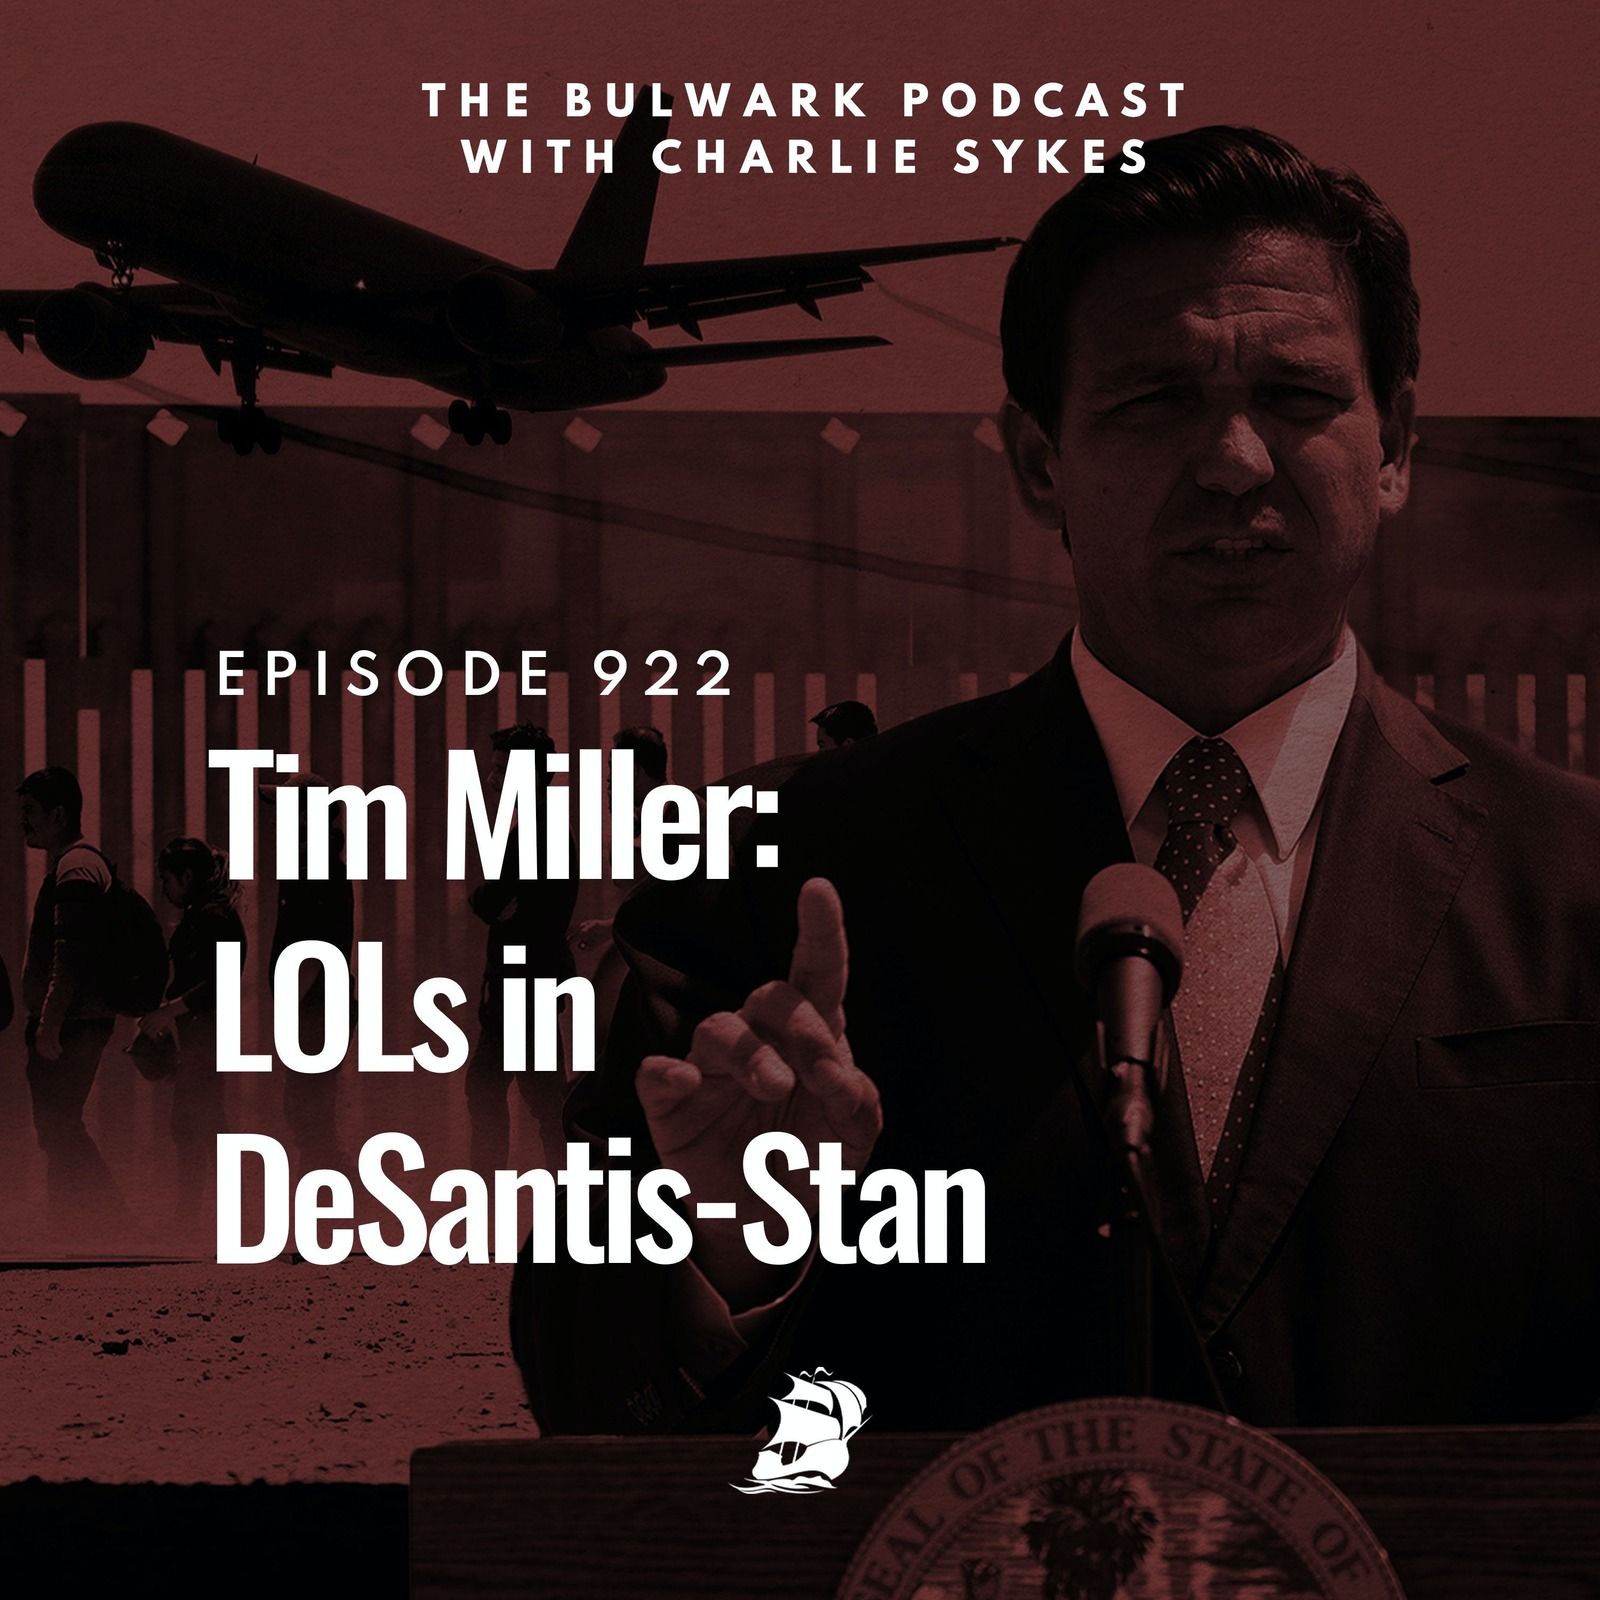 Tim Miller: LOLs in DeSantis-Stan by The Bulwark Podcast